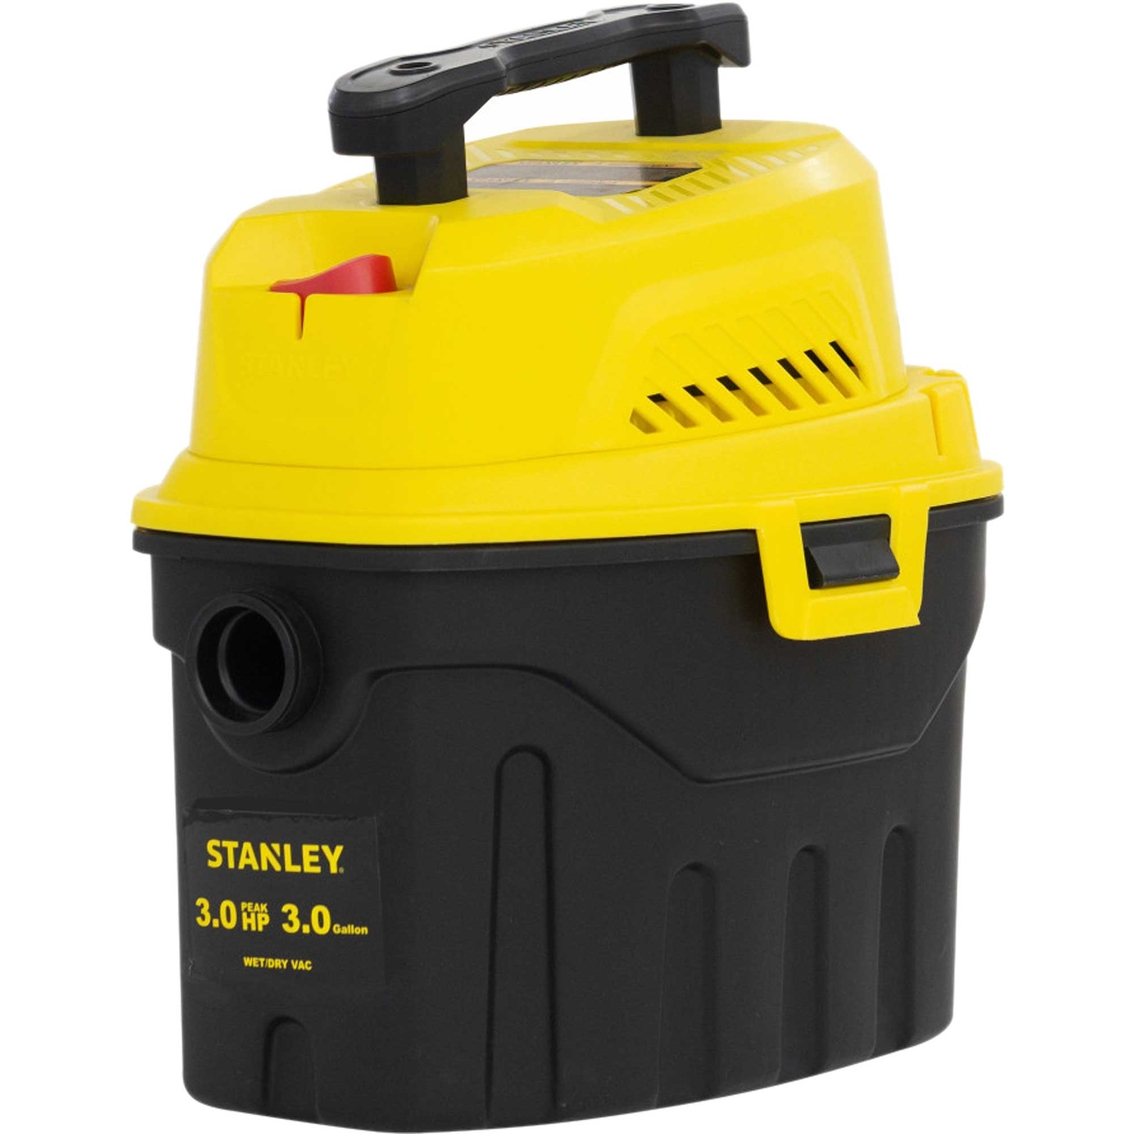 Stanley 3 gal. 3 Horsepower Portable Wet/Dry Vacuum - Image 4 of 4